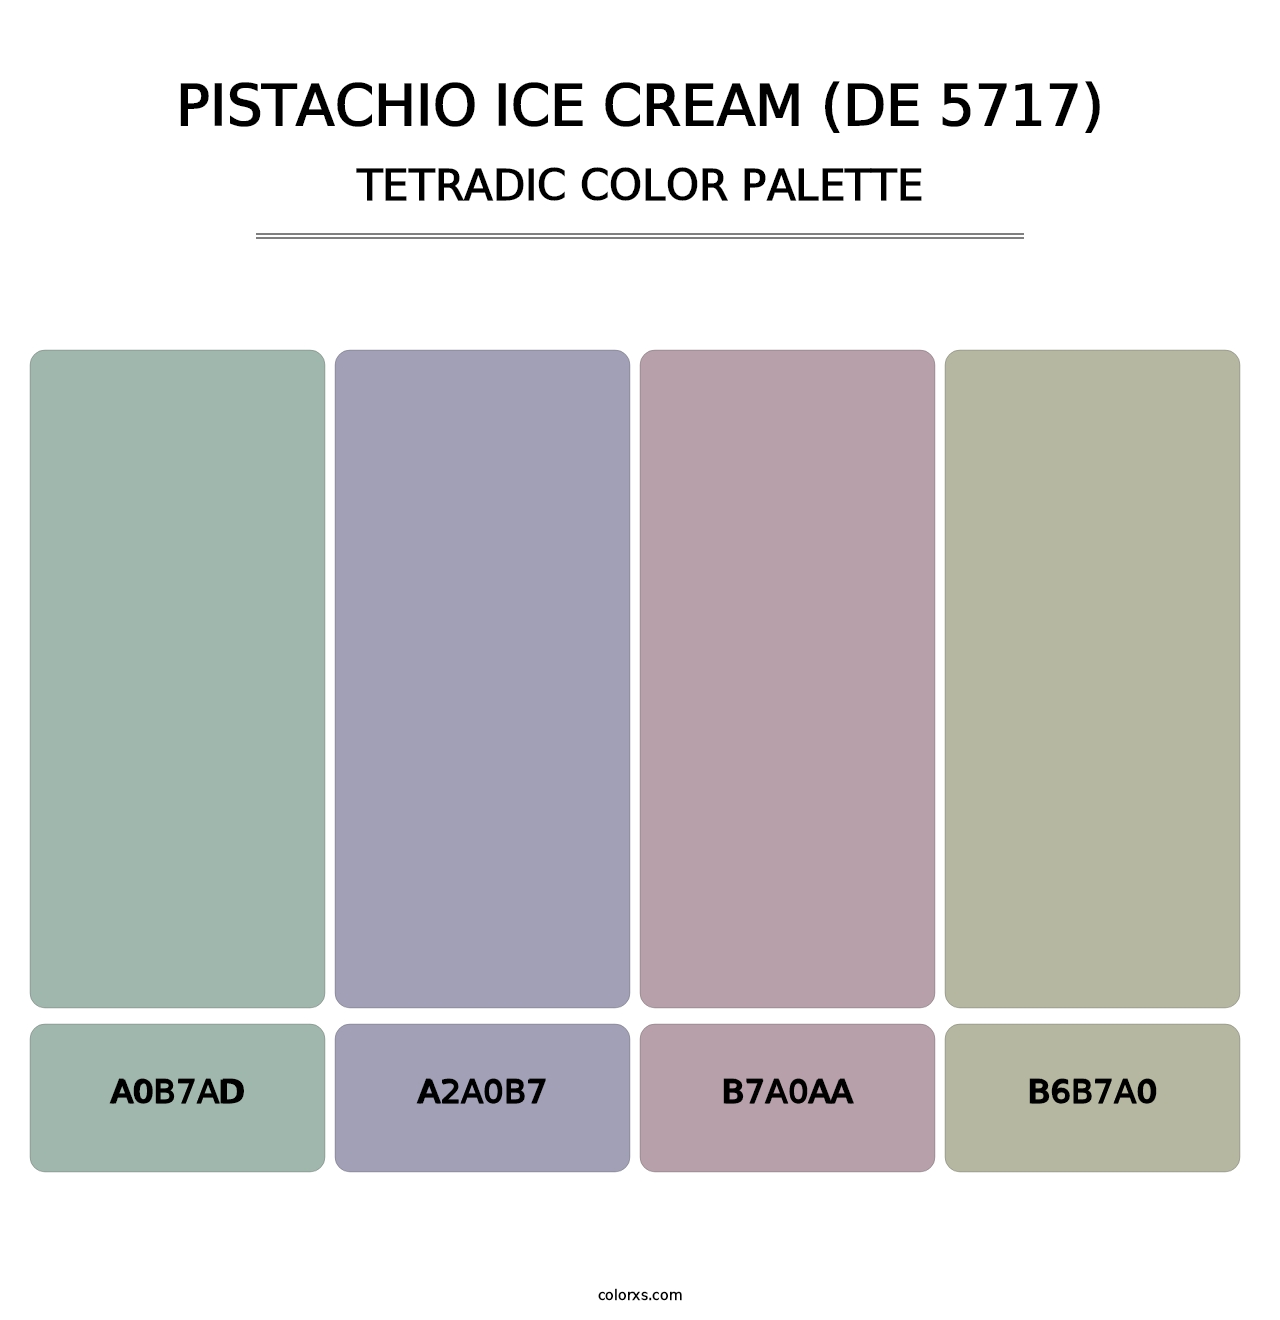 Pistachio Ice Cream (DE 5717) - Tetradic Color Palette